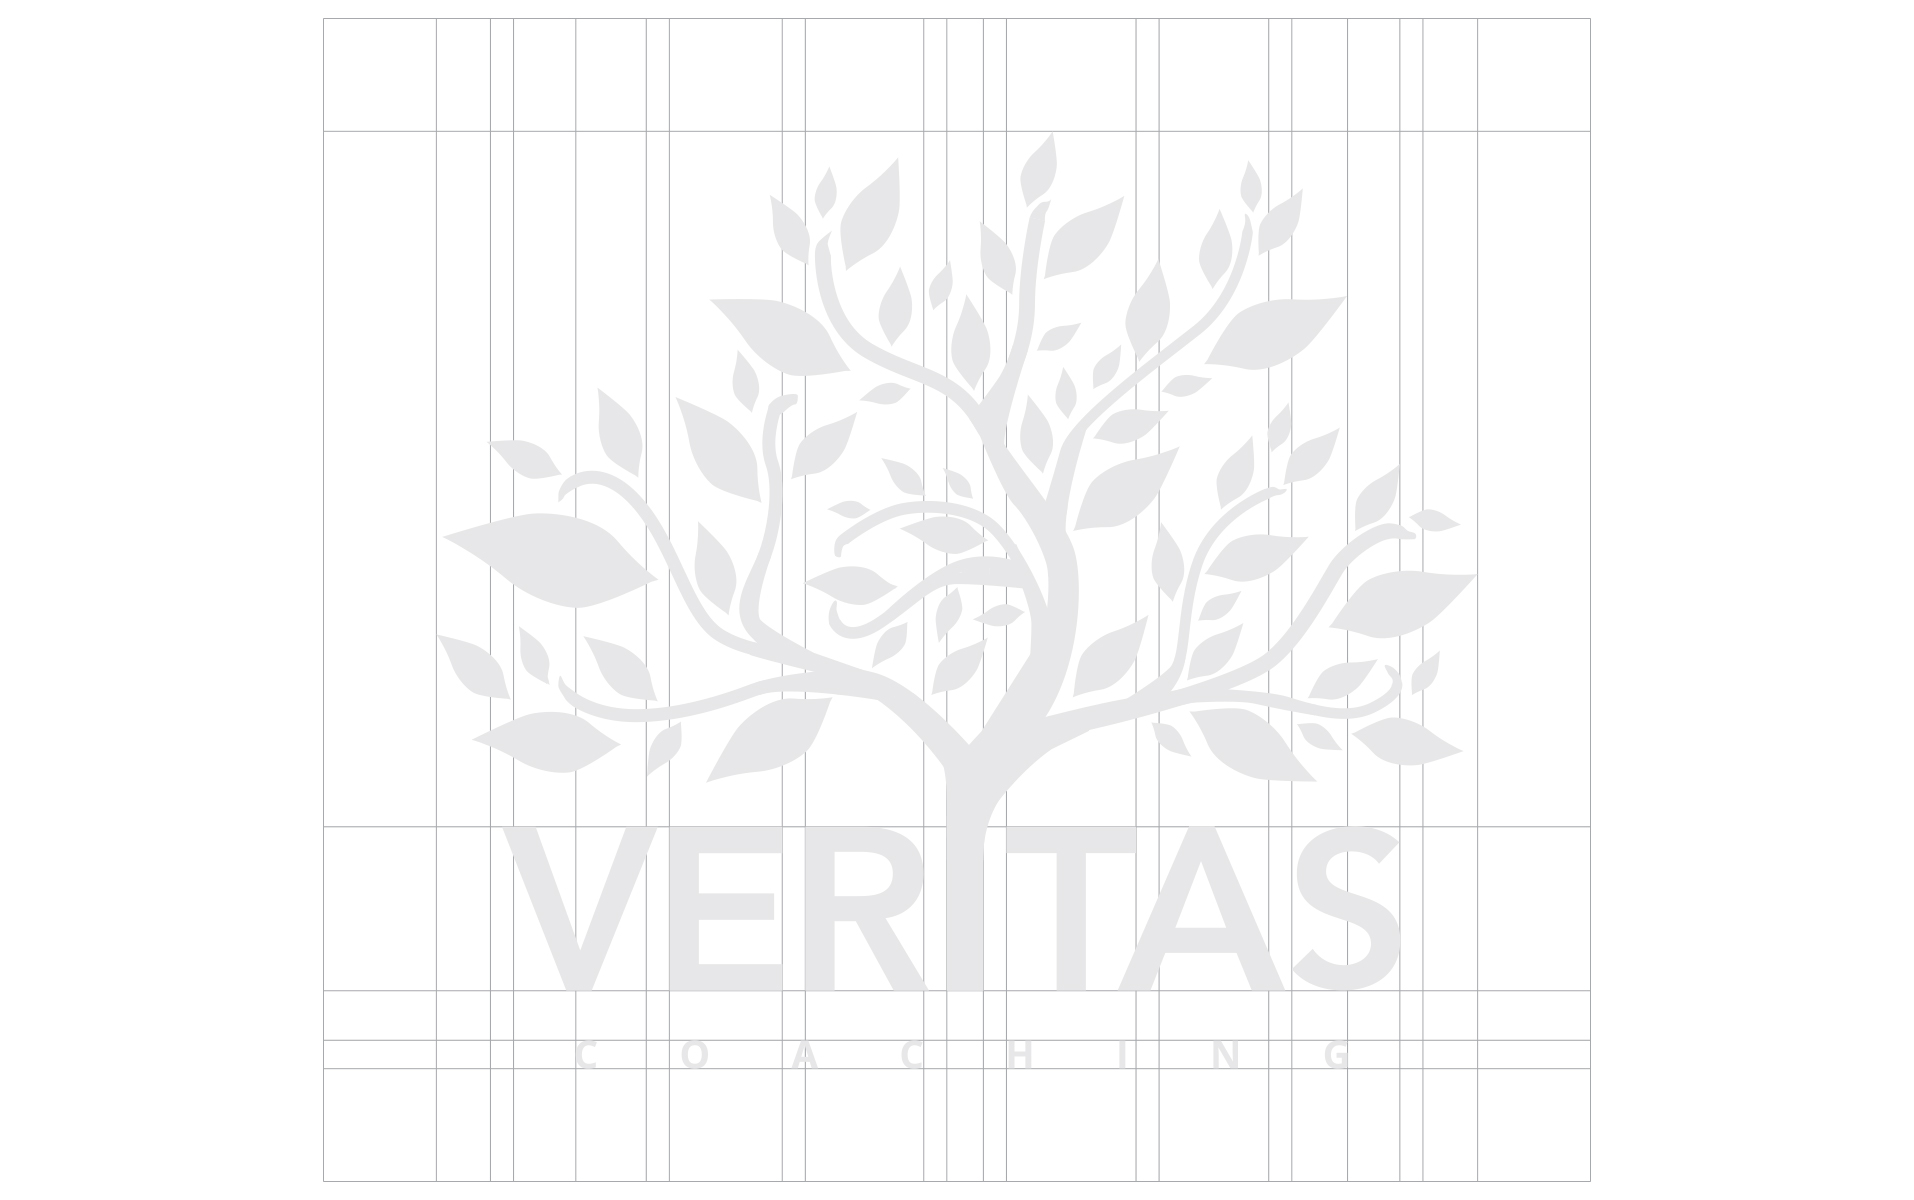 Veritas Logo Creation